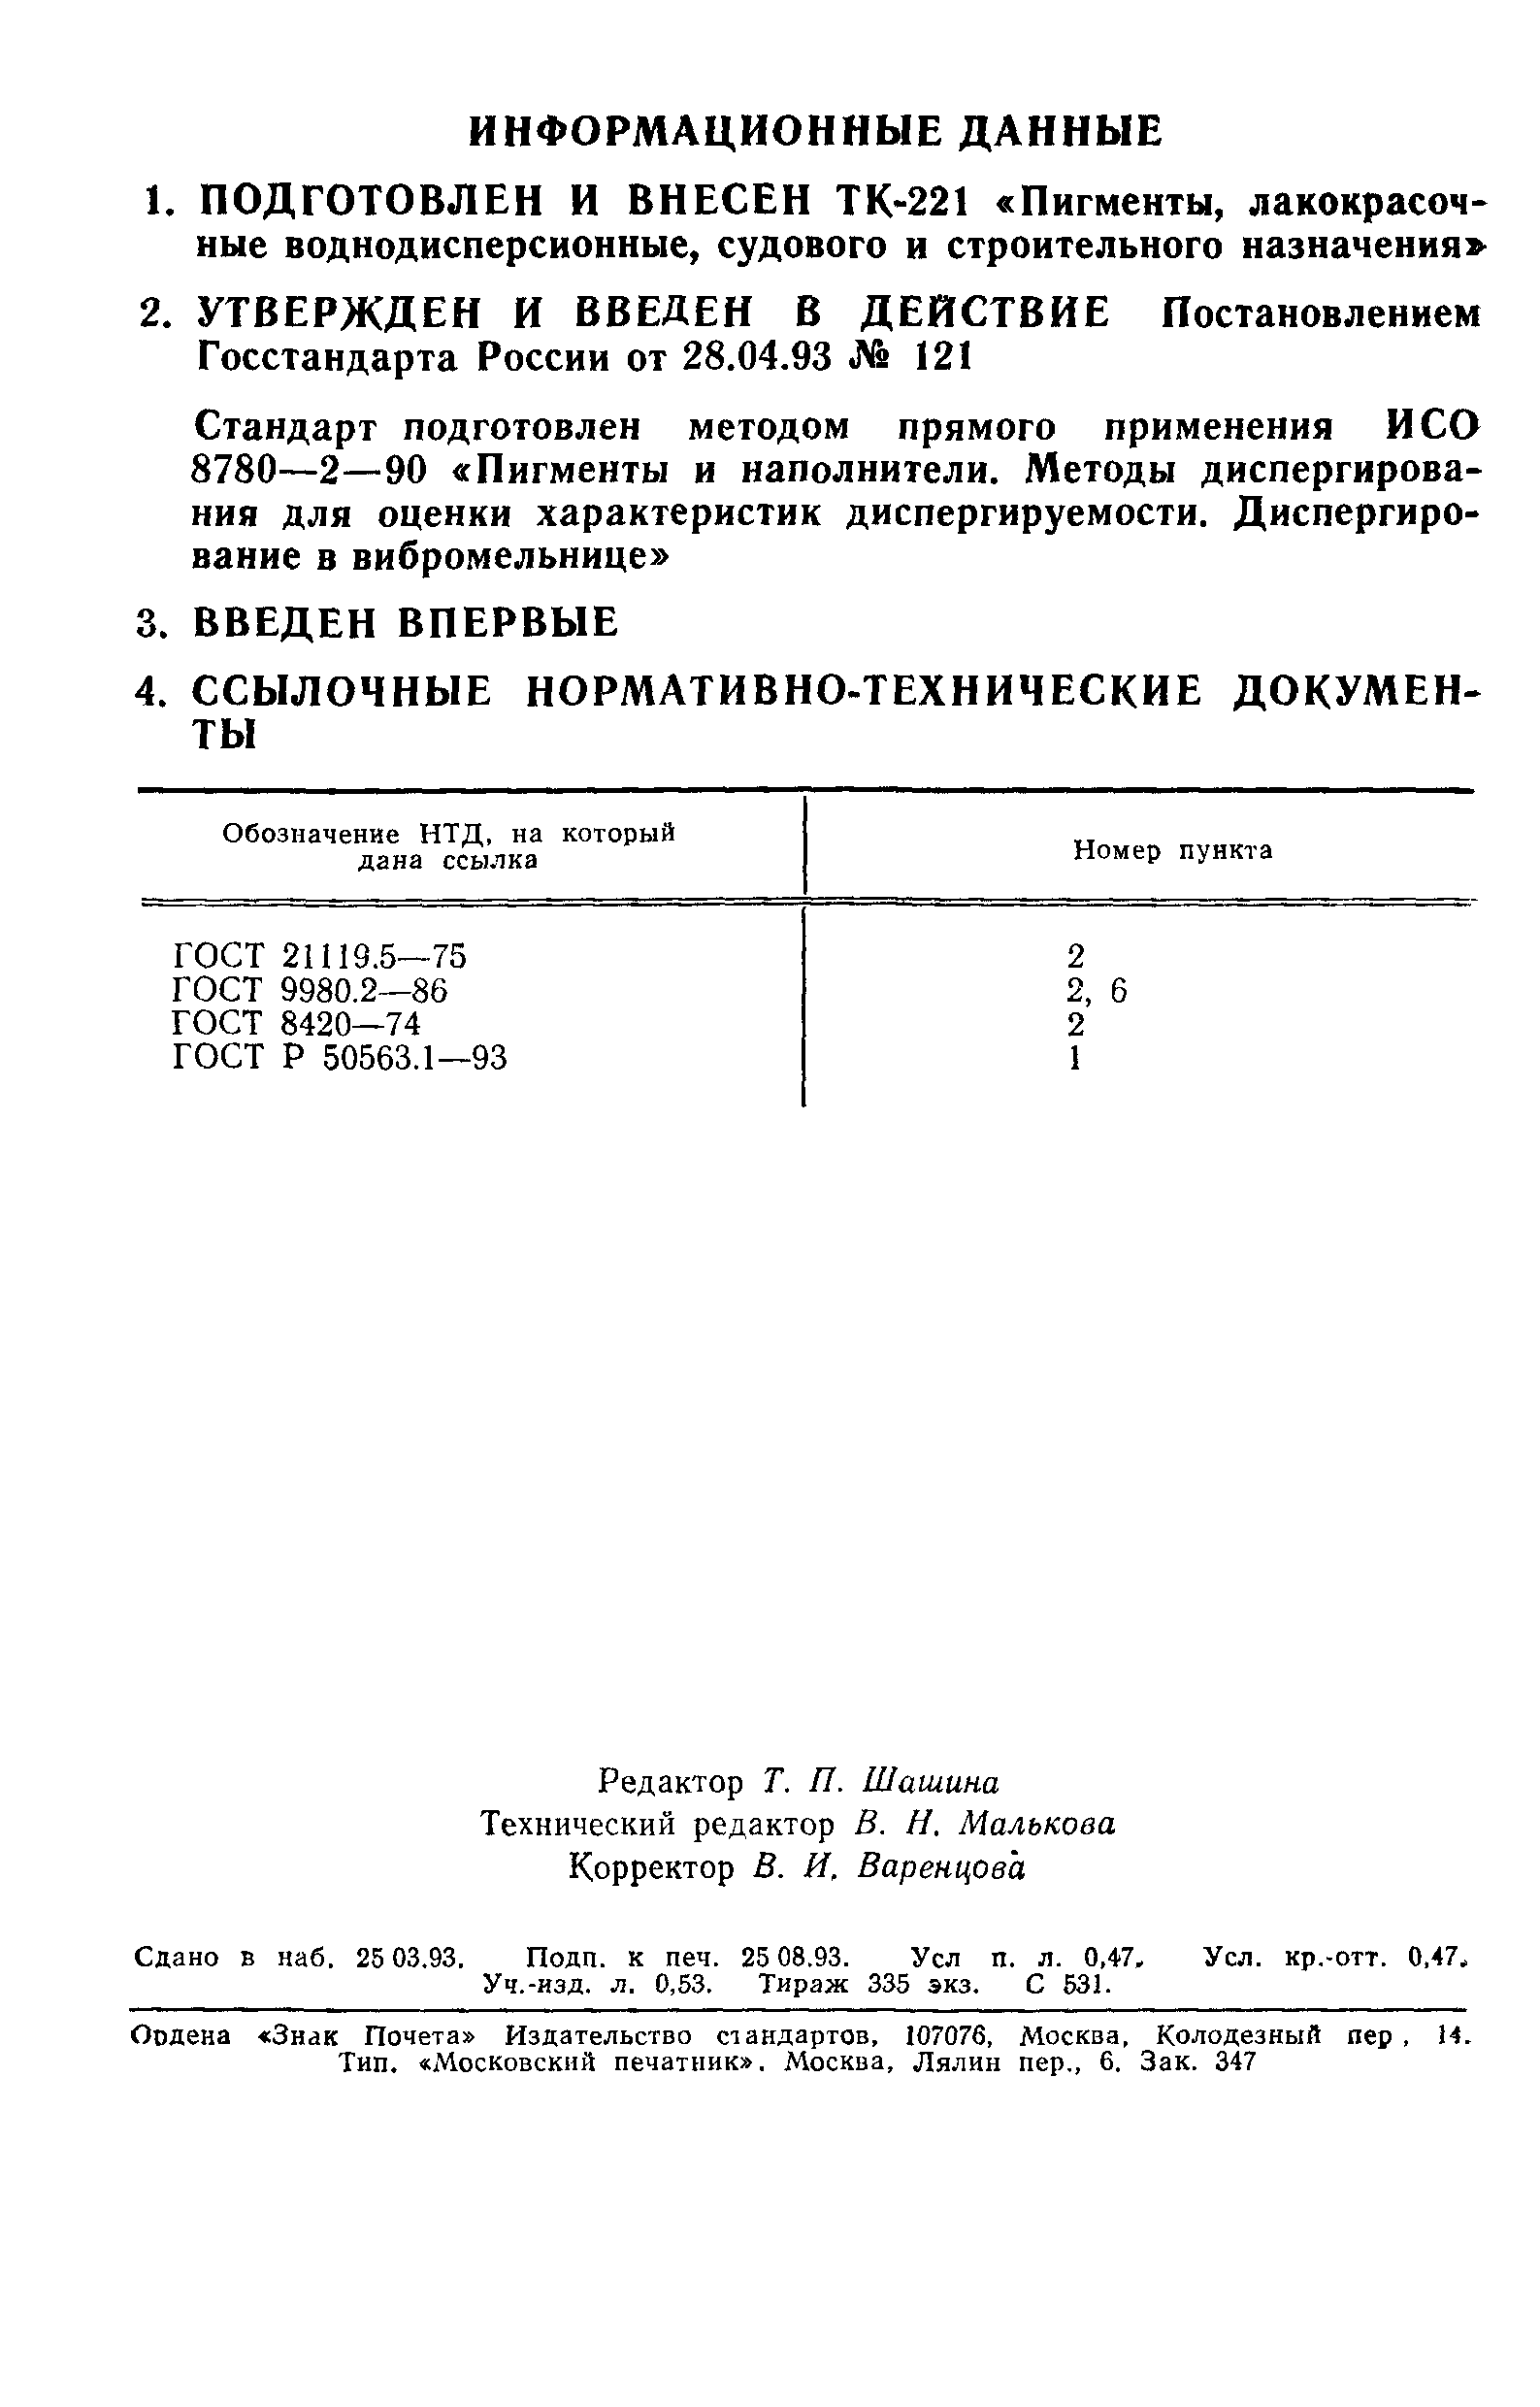 ГОСТ Р 50563.2-93